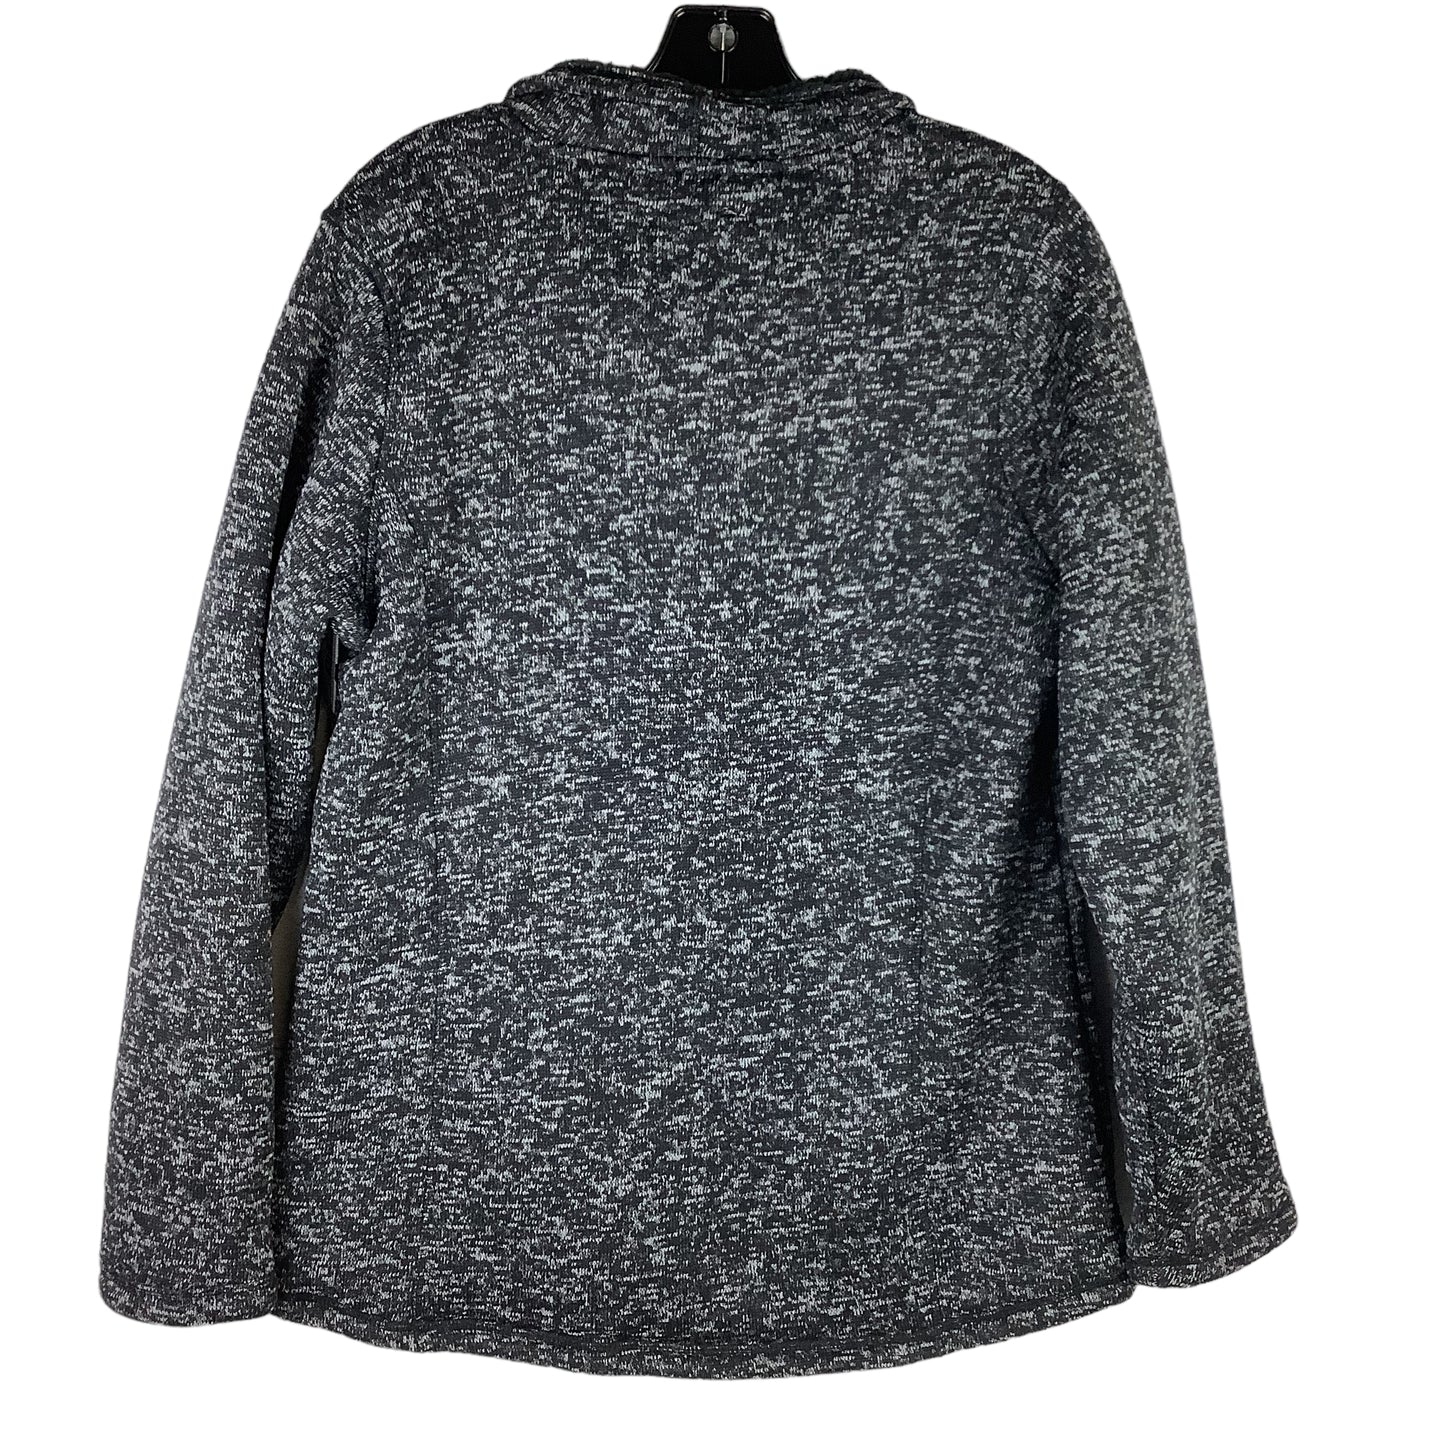 Jacket Fleece By Avalanche  Size: L